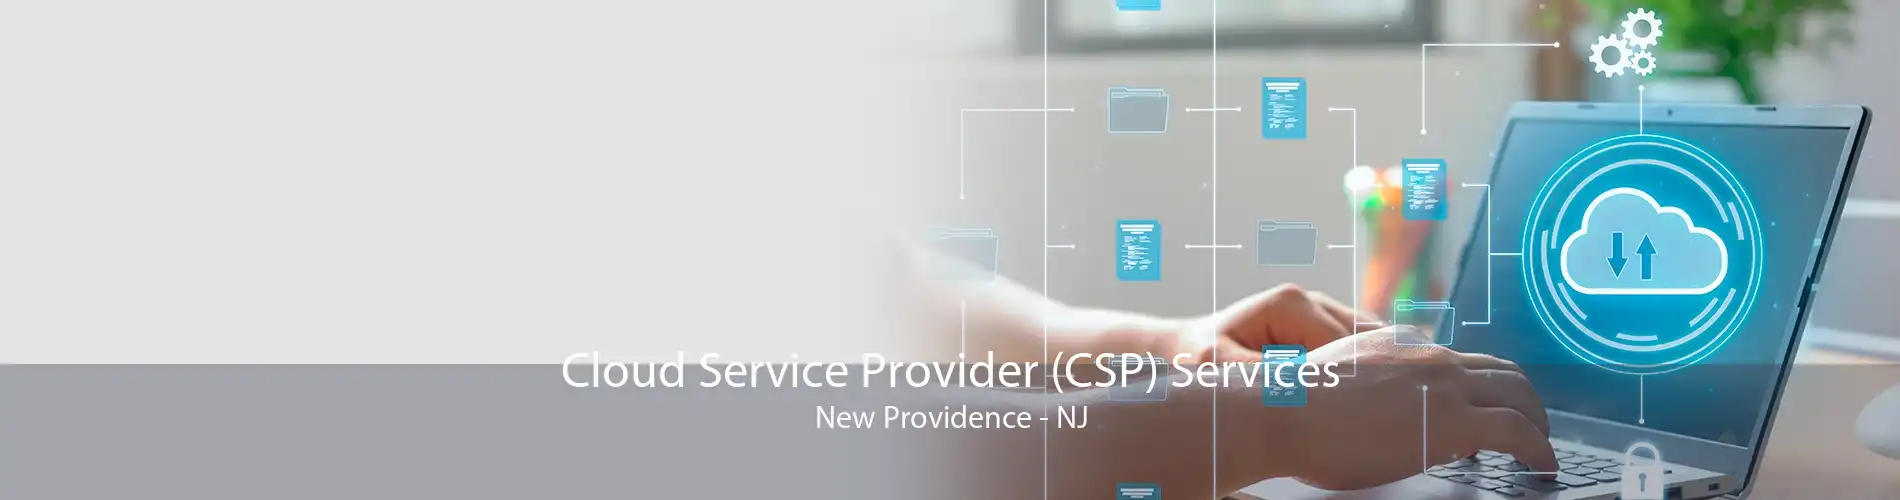 Cloud Service Provider (CSP) Services New Providence - NJ